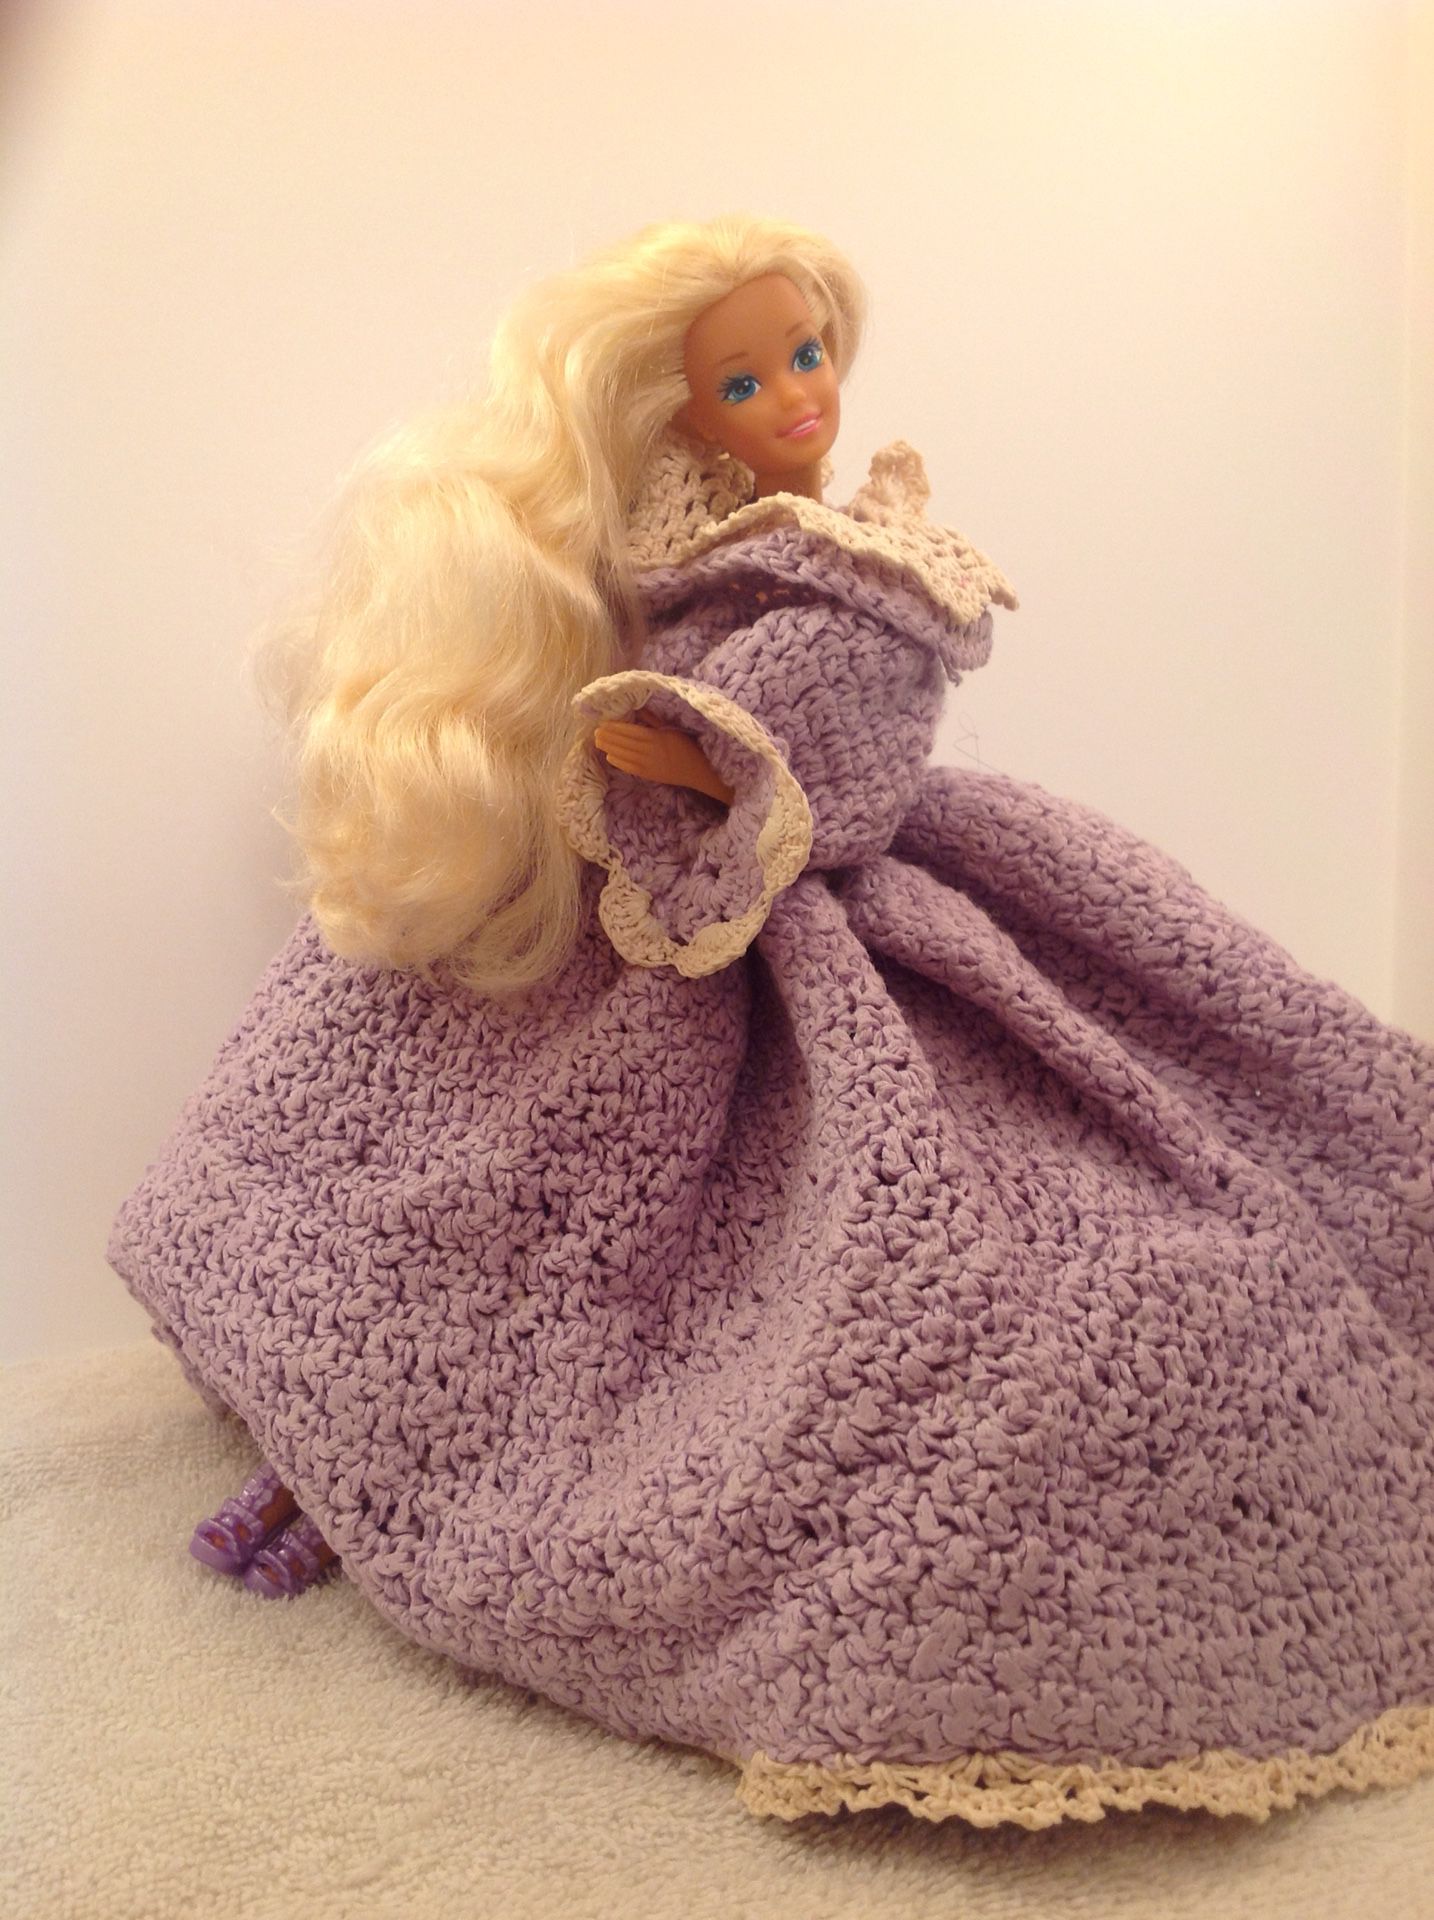 Barbie crocheted lavender dress